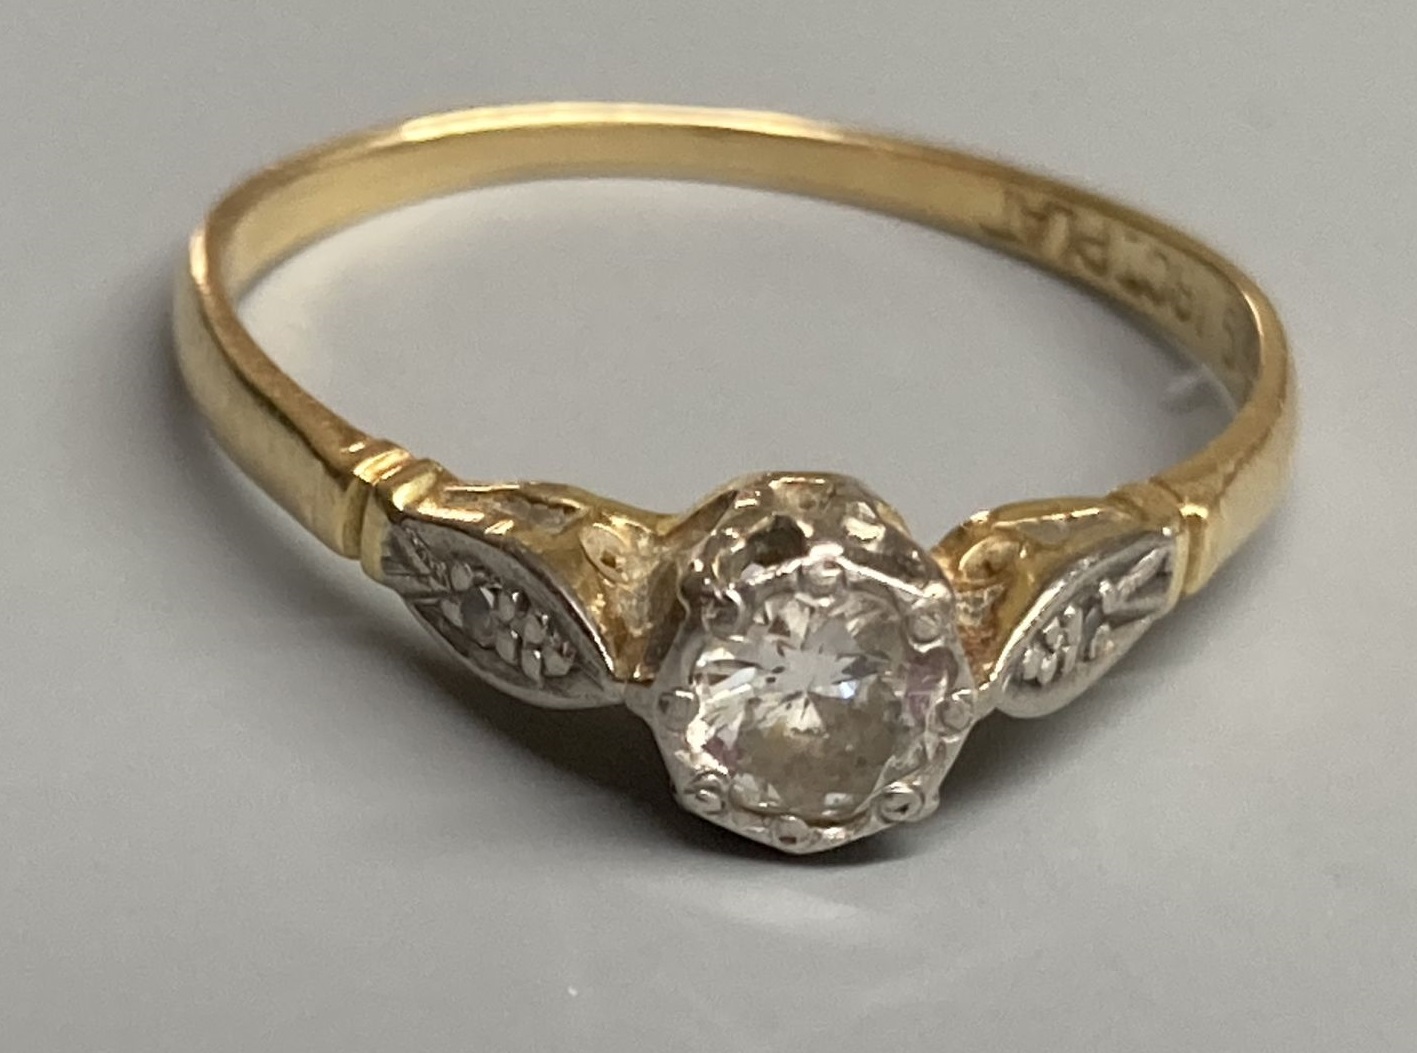 An 18ct & plat, single stone diamond ring, with diamond set shoulders, size P, gross 1.9 grams.